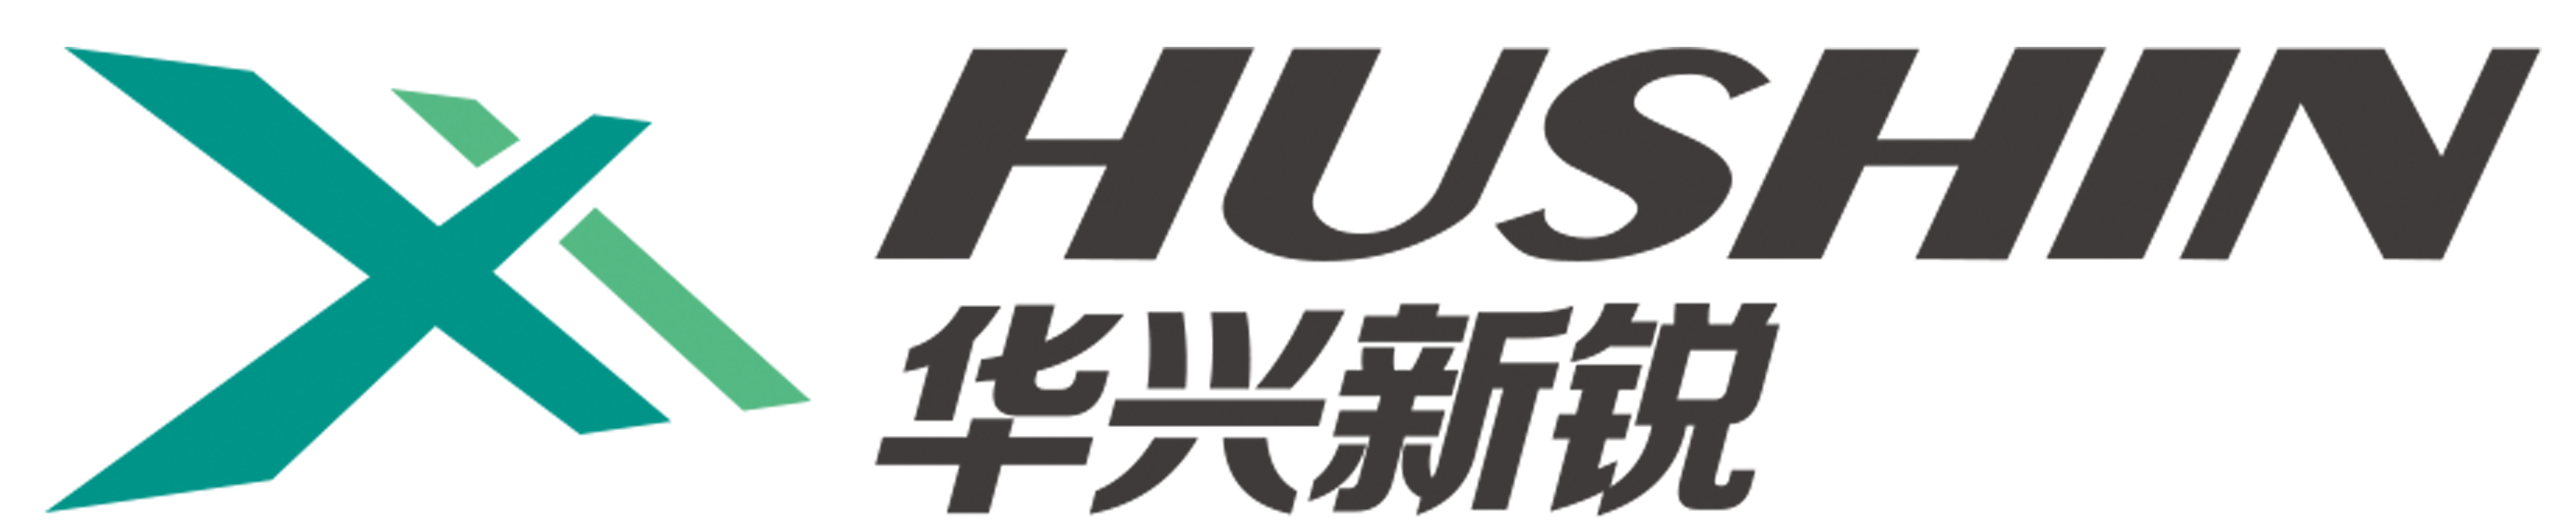 Huaxingxinrui Communication Technology Group Co.,Ltd